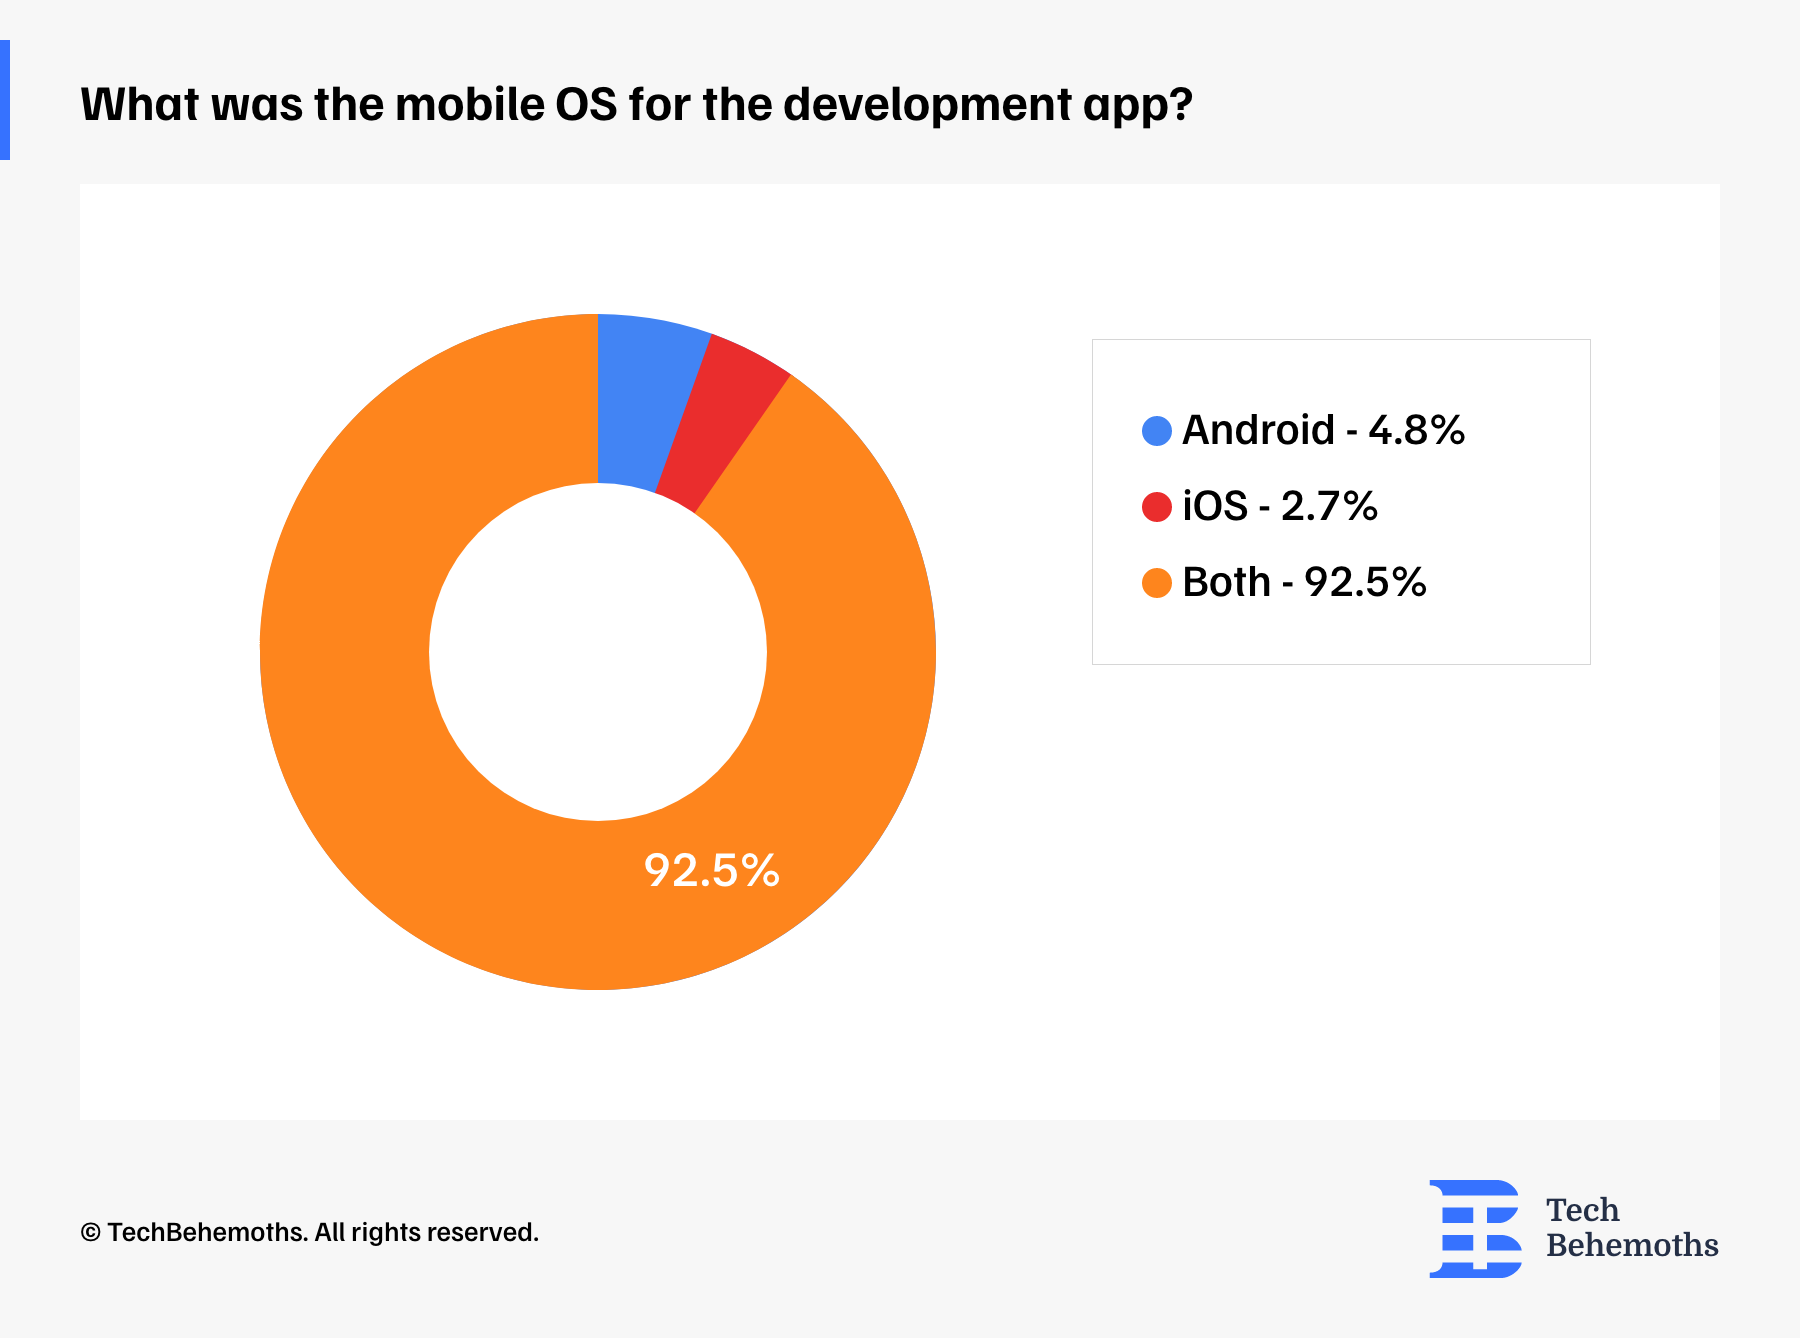 mobile app development platforms by popularity - survey respondents